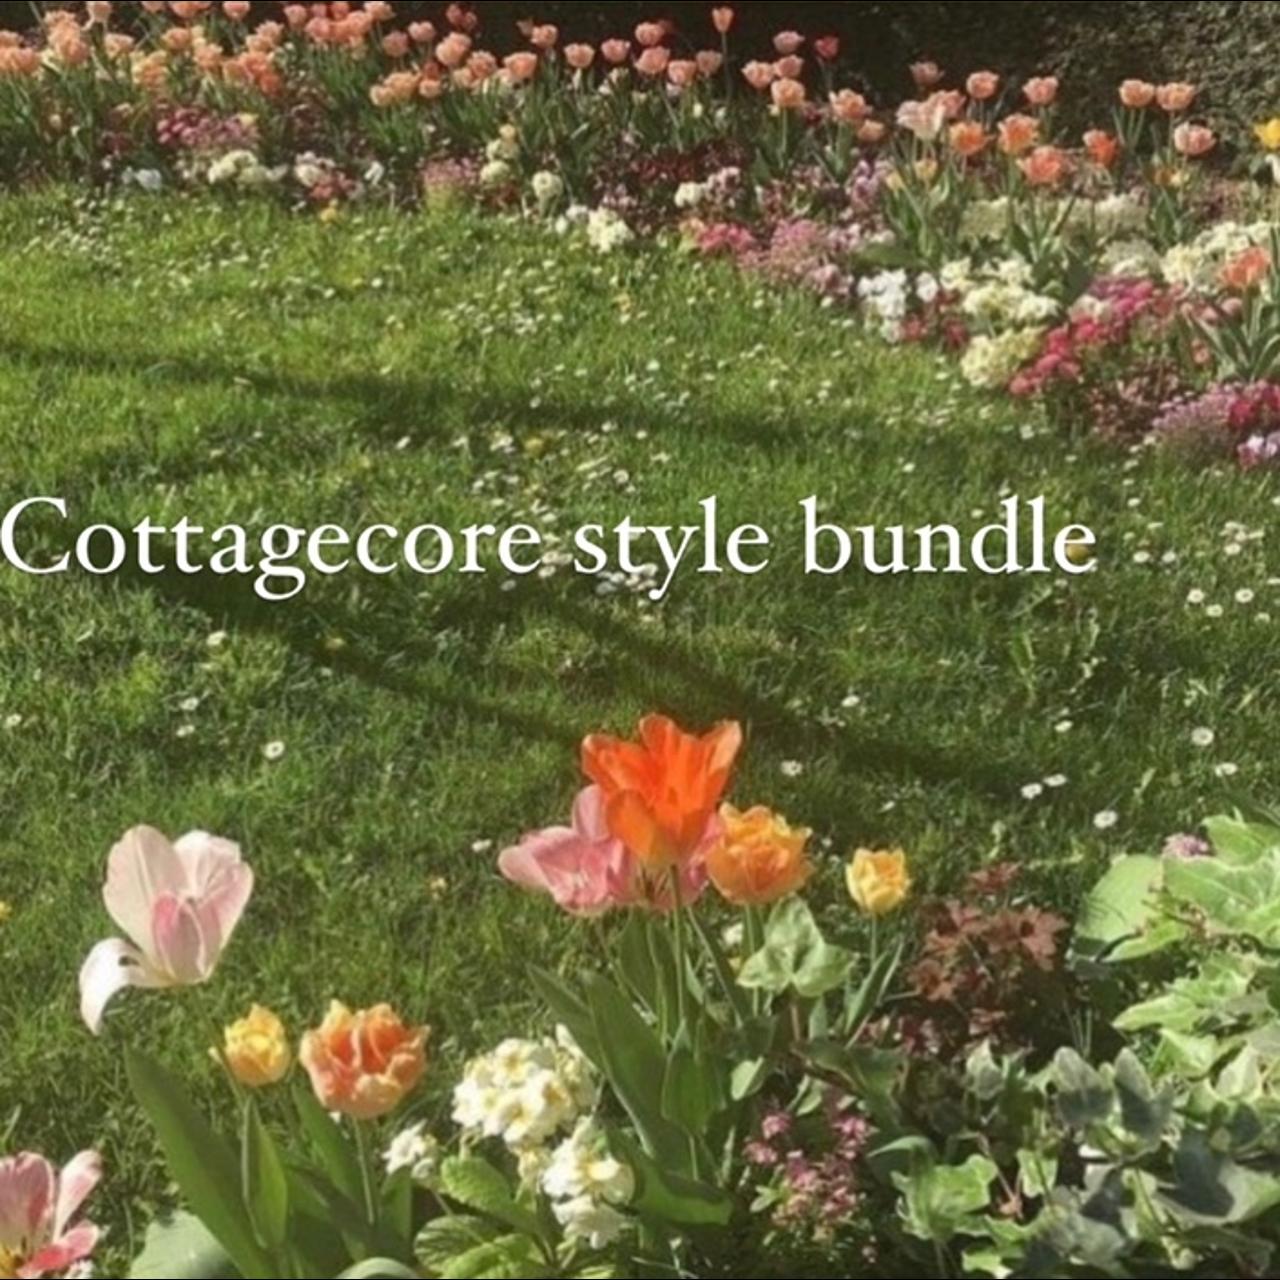 cottagecore style bundle just for you -springtime,... - Depop